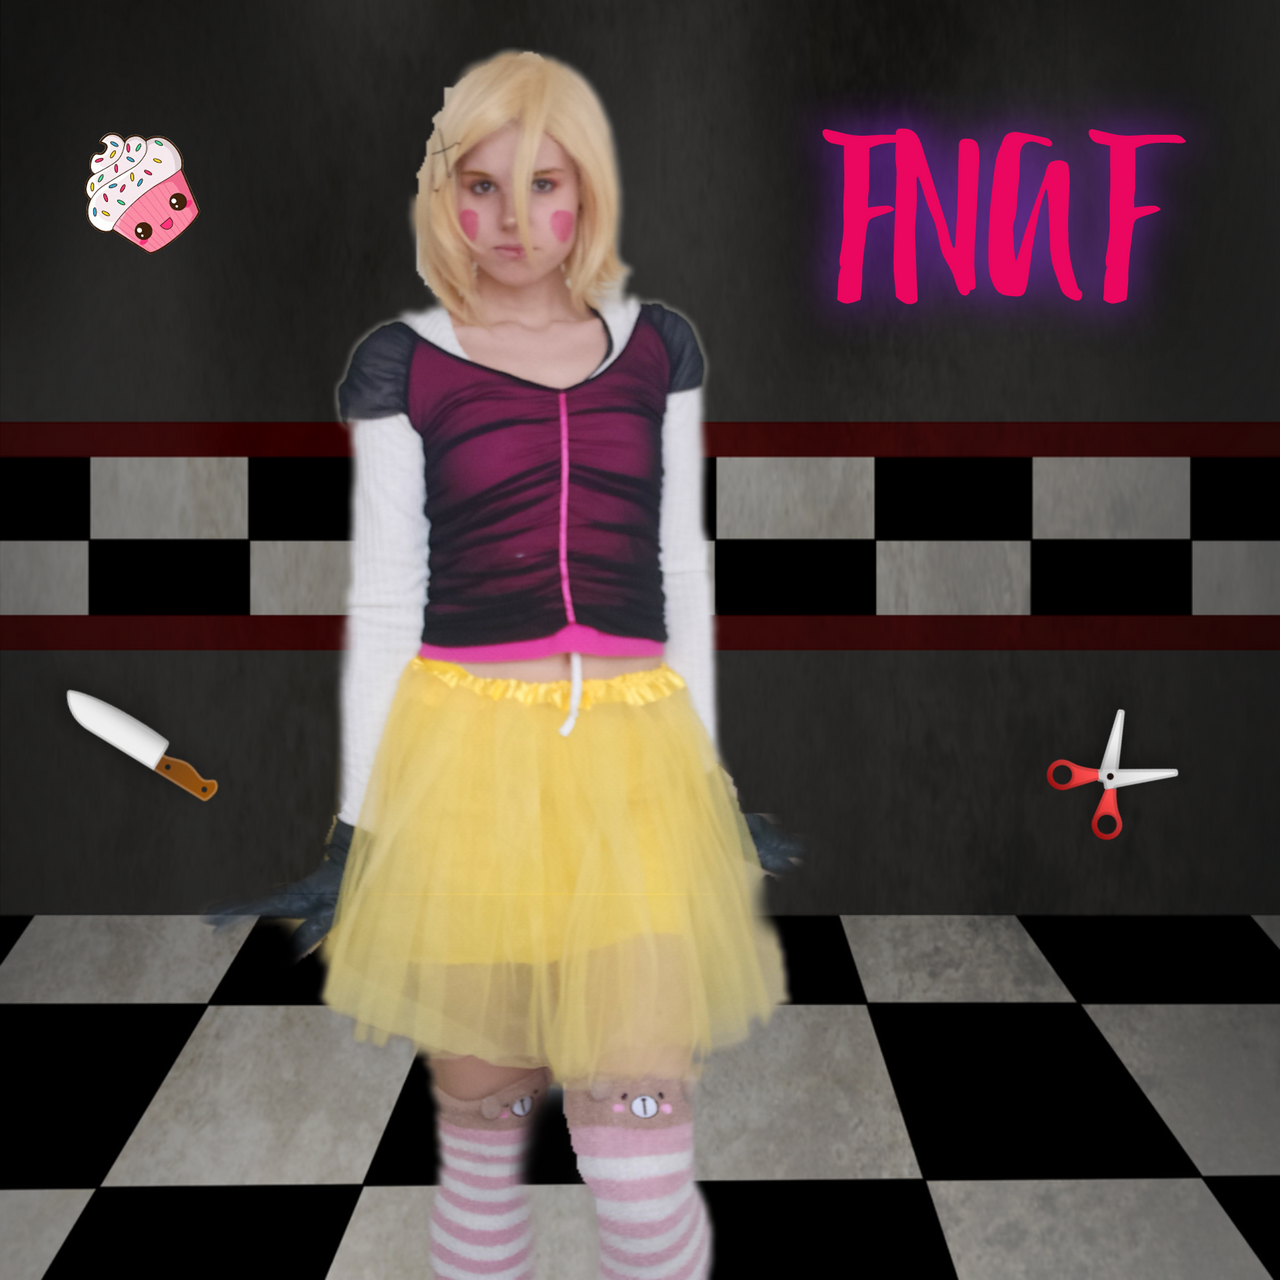 FNAF 4 Cosplay - Nightmare Chica by HazyCosplayer on DeviantArt